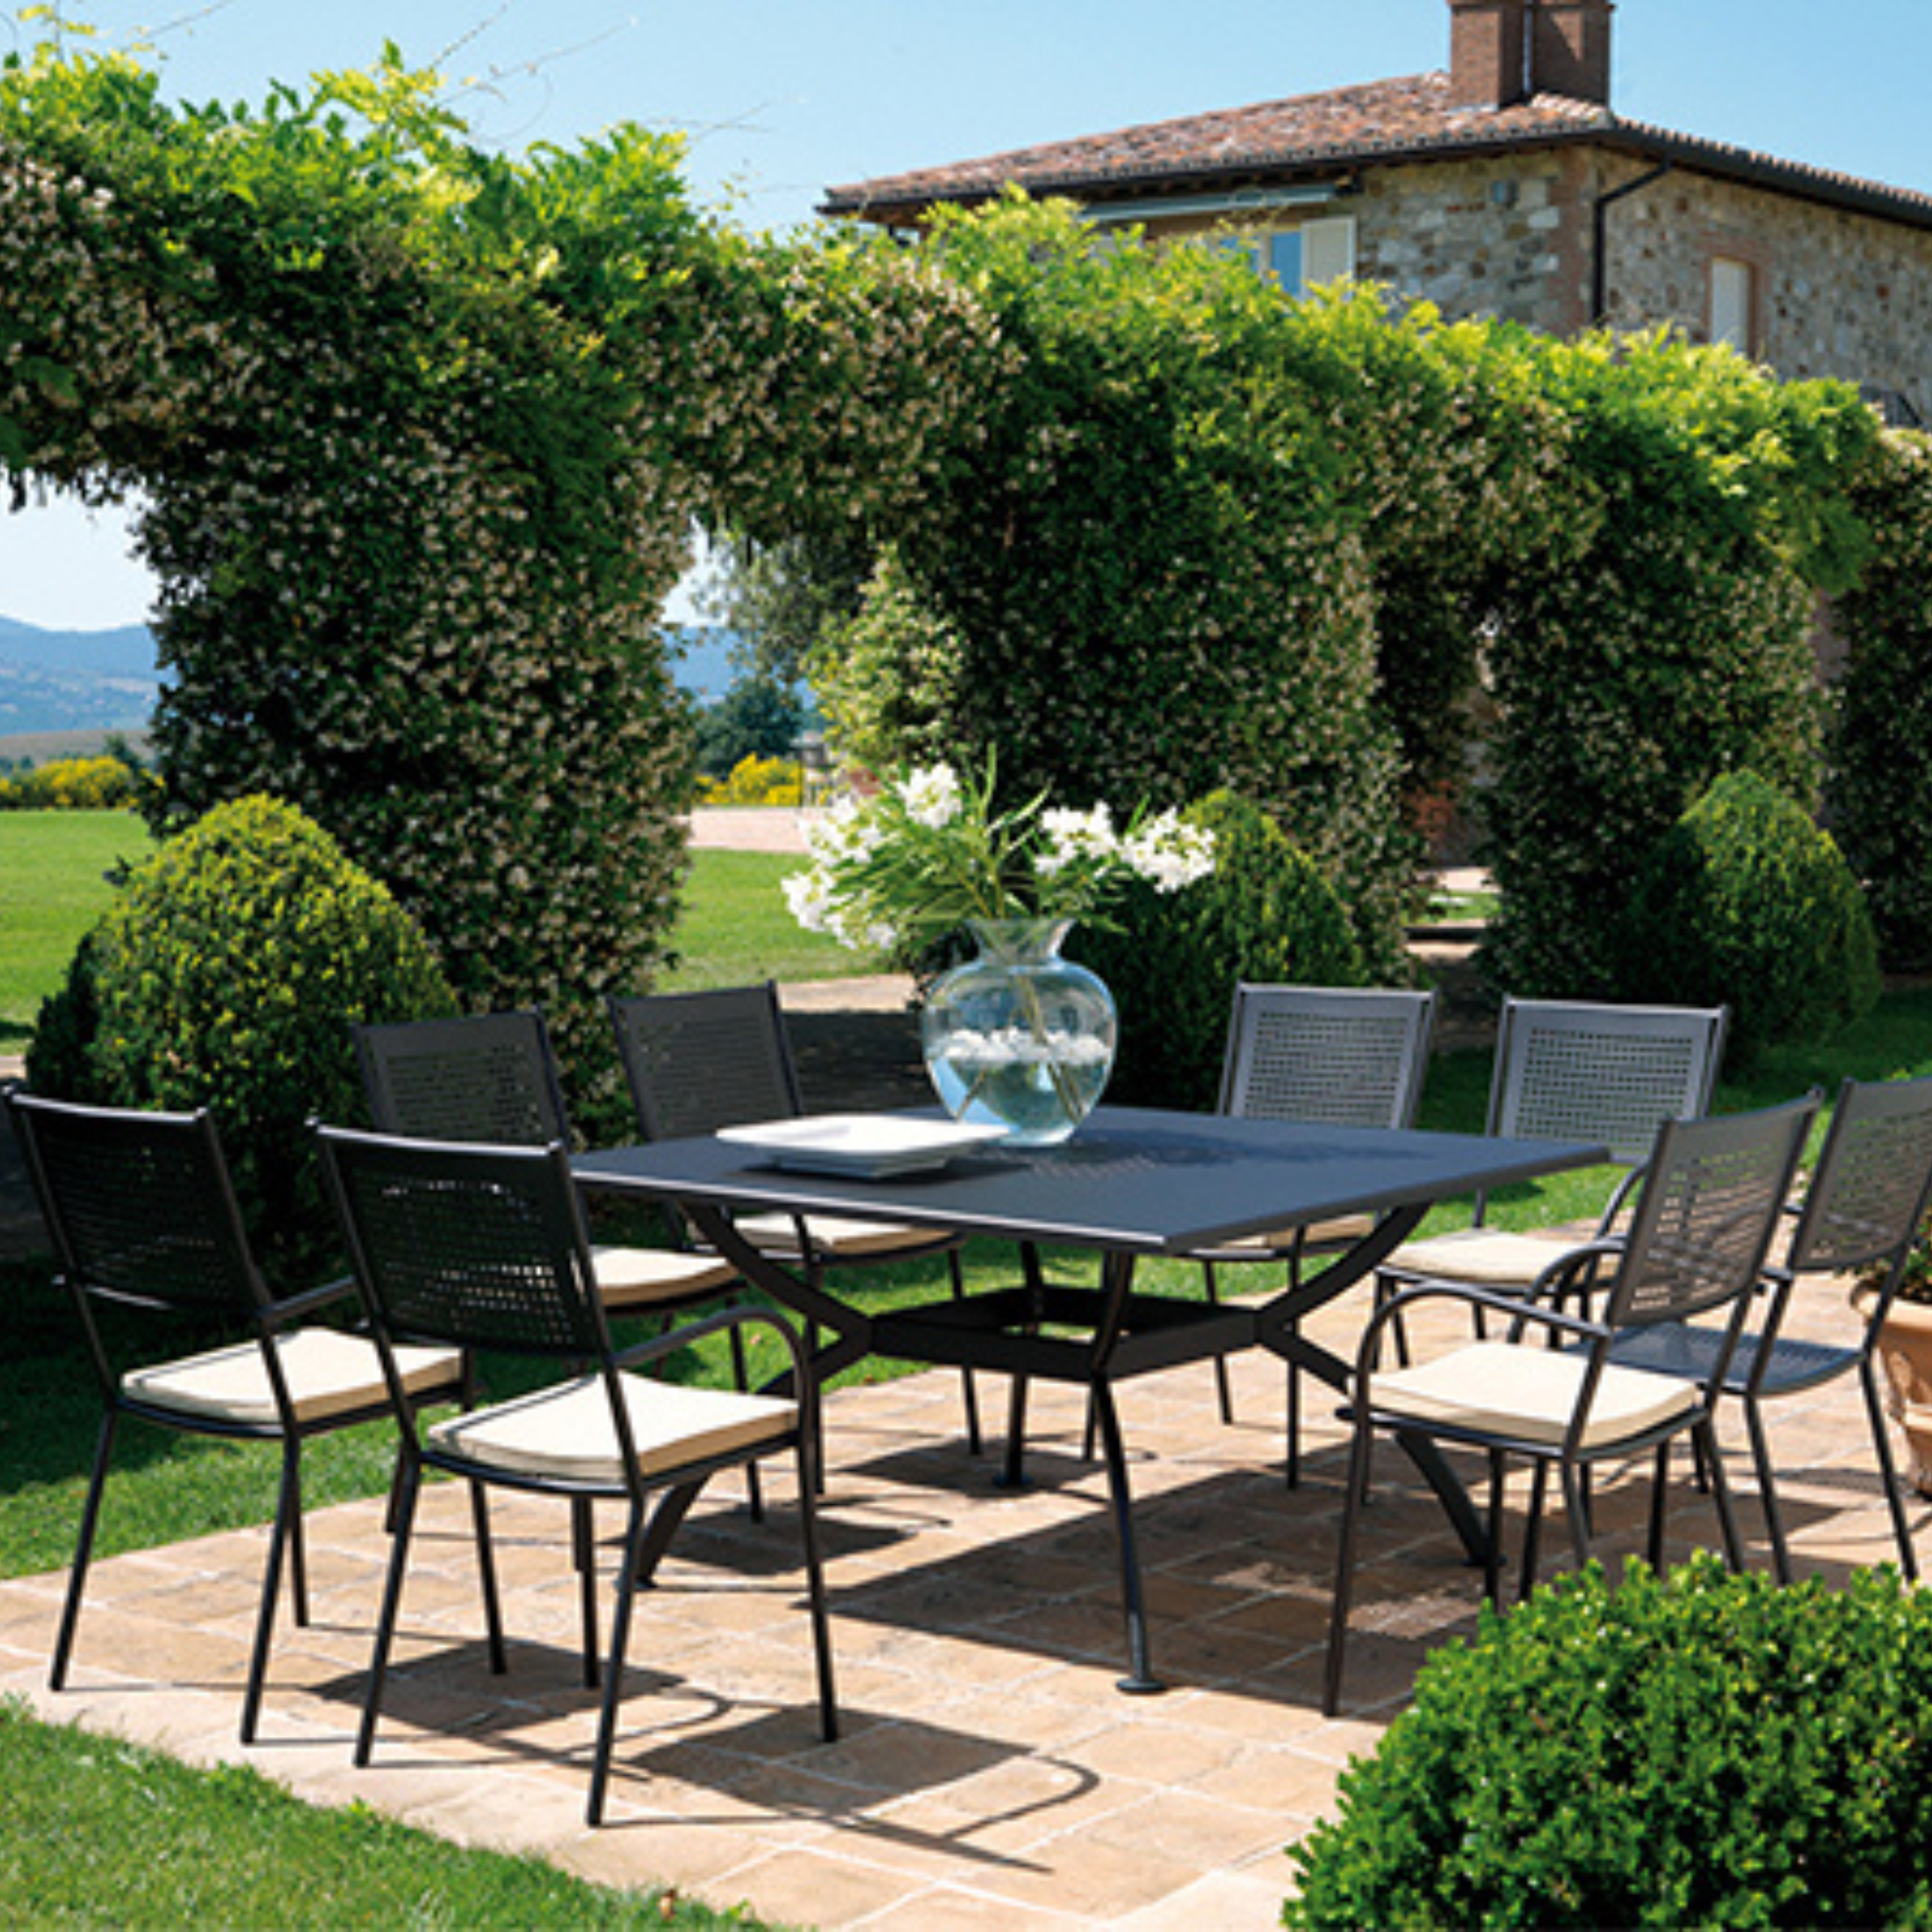 Set di sedie moderne da giardino "Summertime" in metallo verniciato impilabili cm 49x57 95h